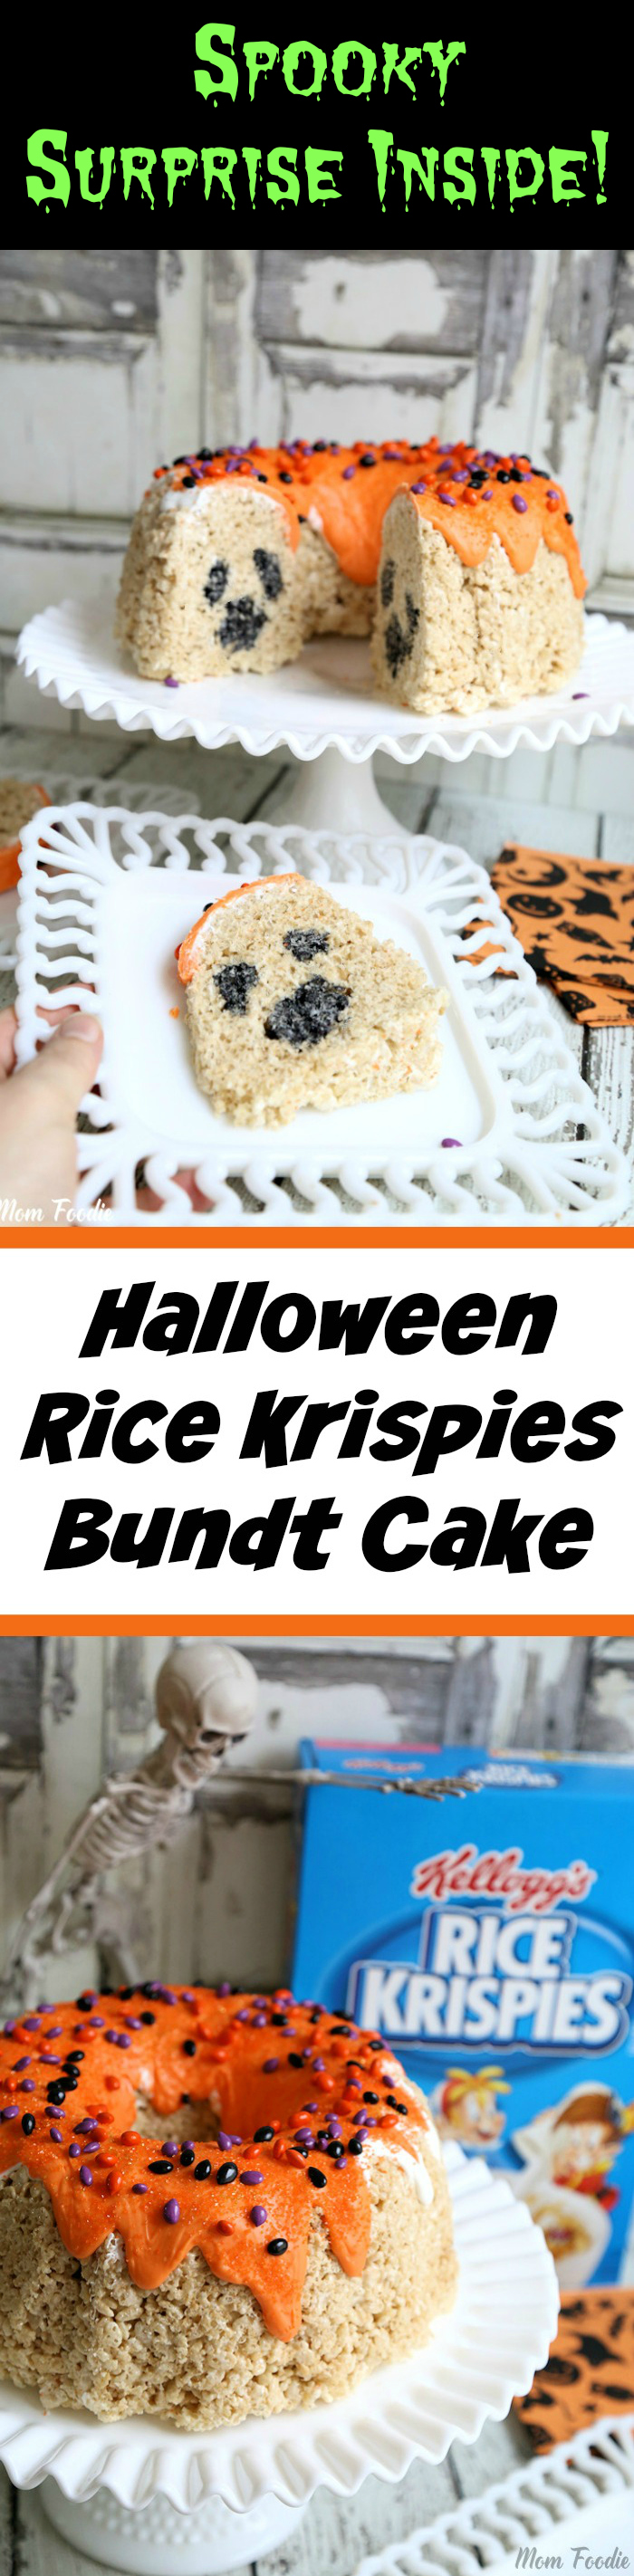 Spooky Surprise Inside Halloween Rice Krispies Bundt Cake